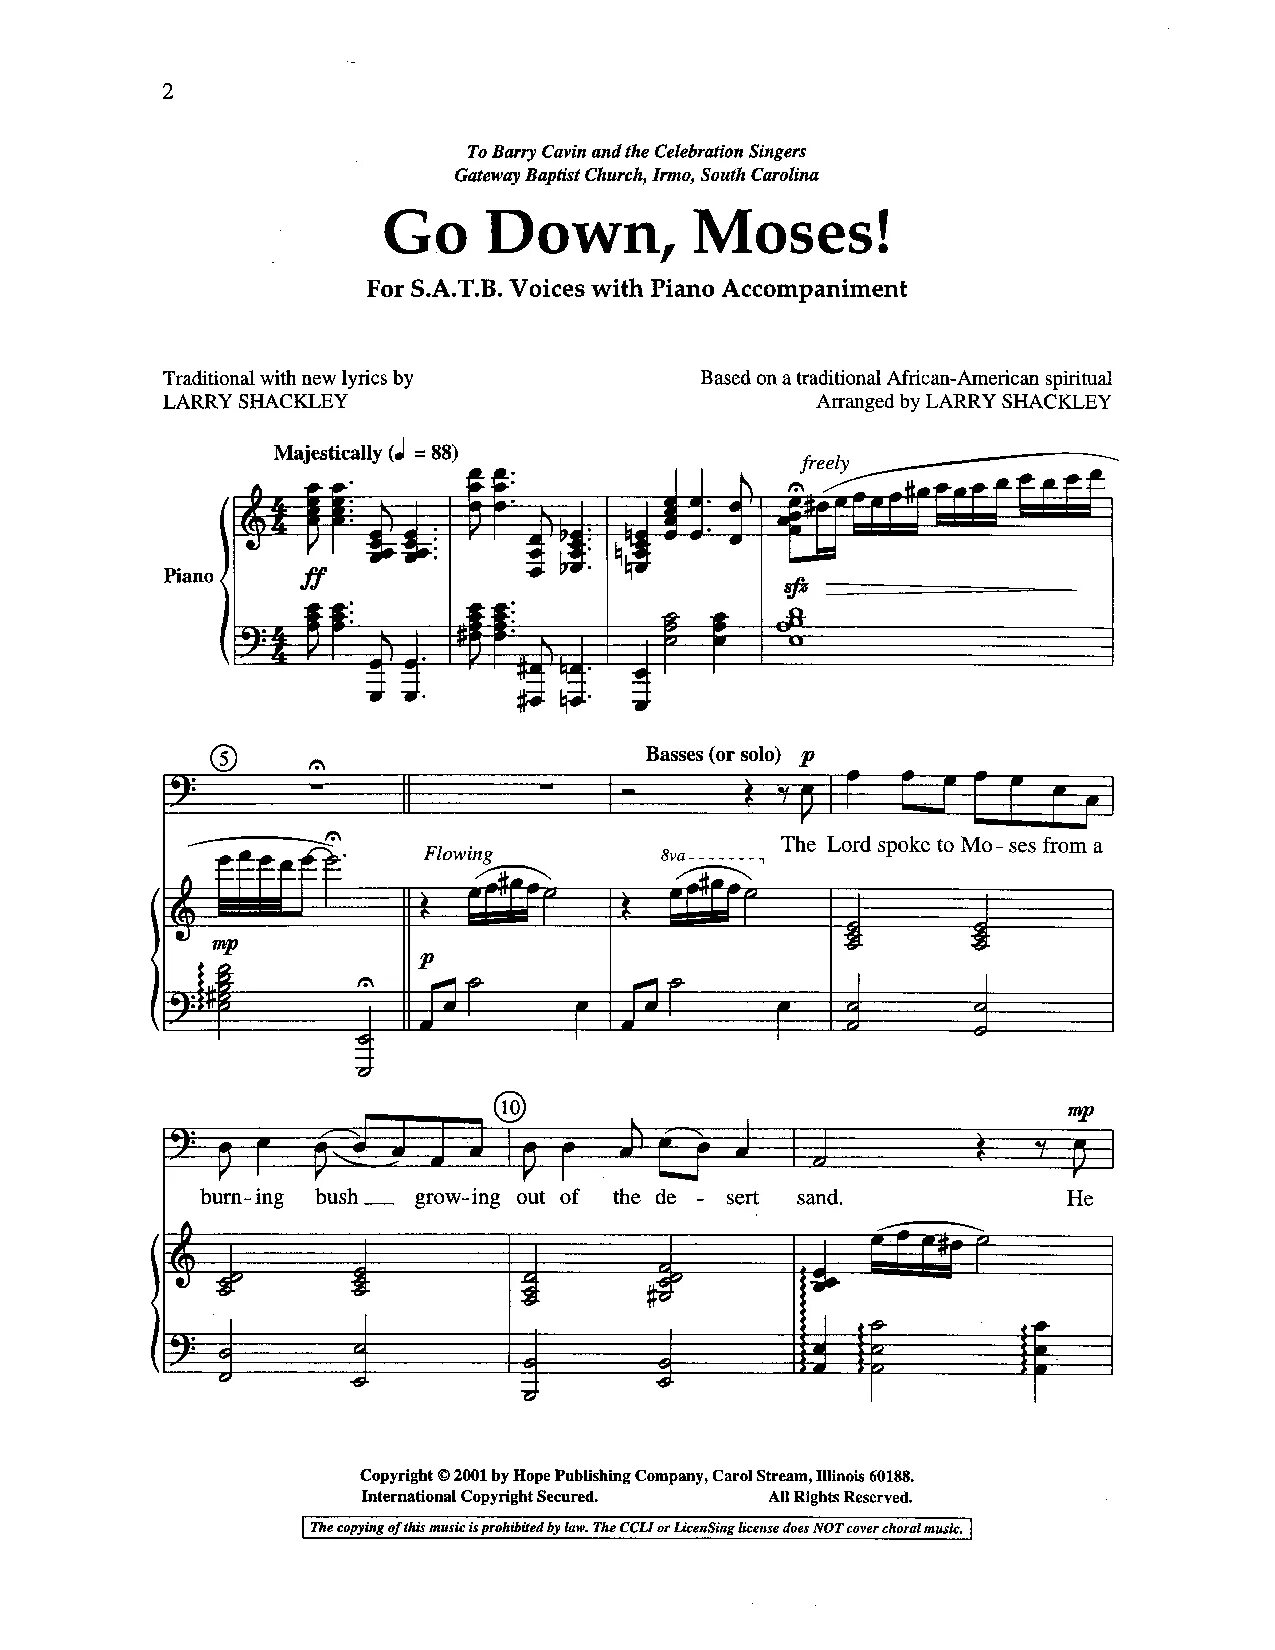 Go moses текст. Go down Moses Ноты для фортепиано. Go down Moses Ноты для хора. Армстронг Ноты для фортепиано go down Moses.